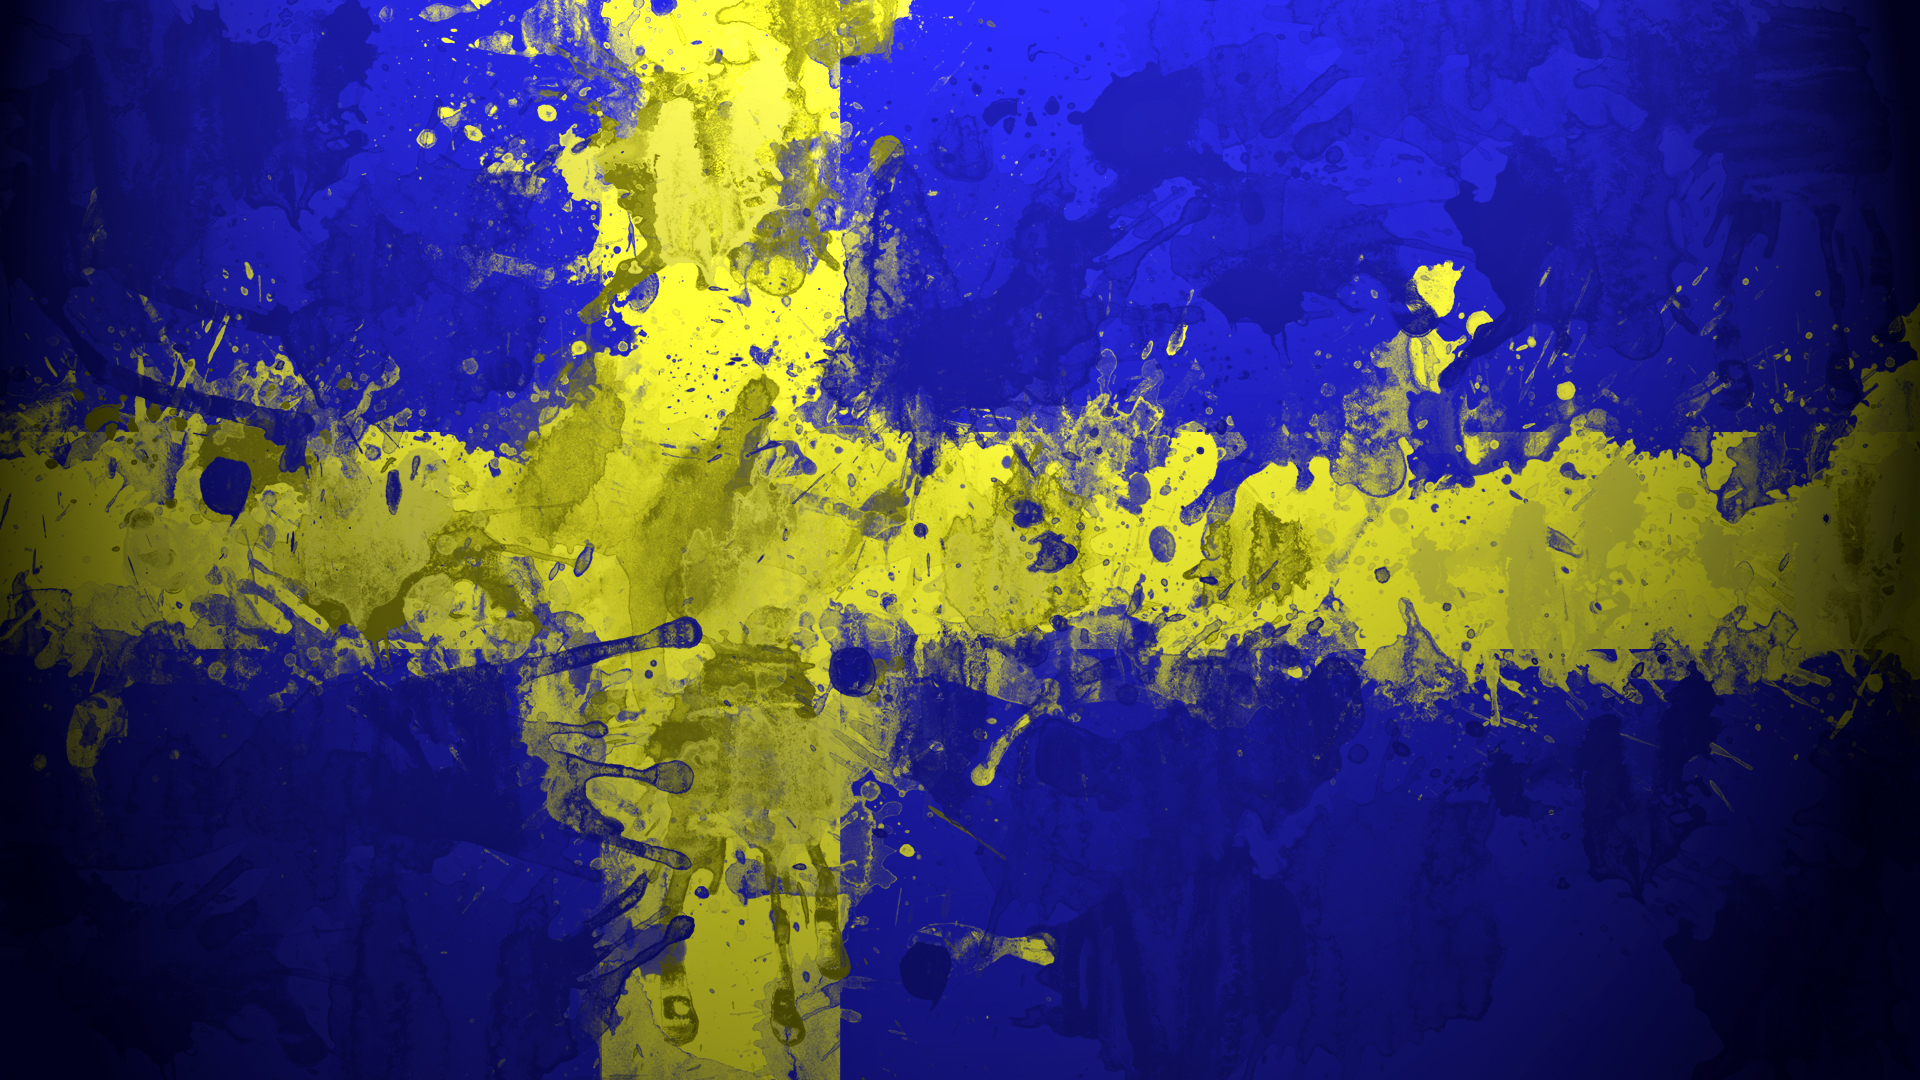 1920x1080 Free download Swedish Flag Wallpaper Download [] for your Desktop, Mobile \u0026 Tablet | Explore 75+ Swedish Wallpaper | Swedish Wallpaper Designs, Scandinavian Wallpaper for Walls, Swedish Flag Wallpaper